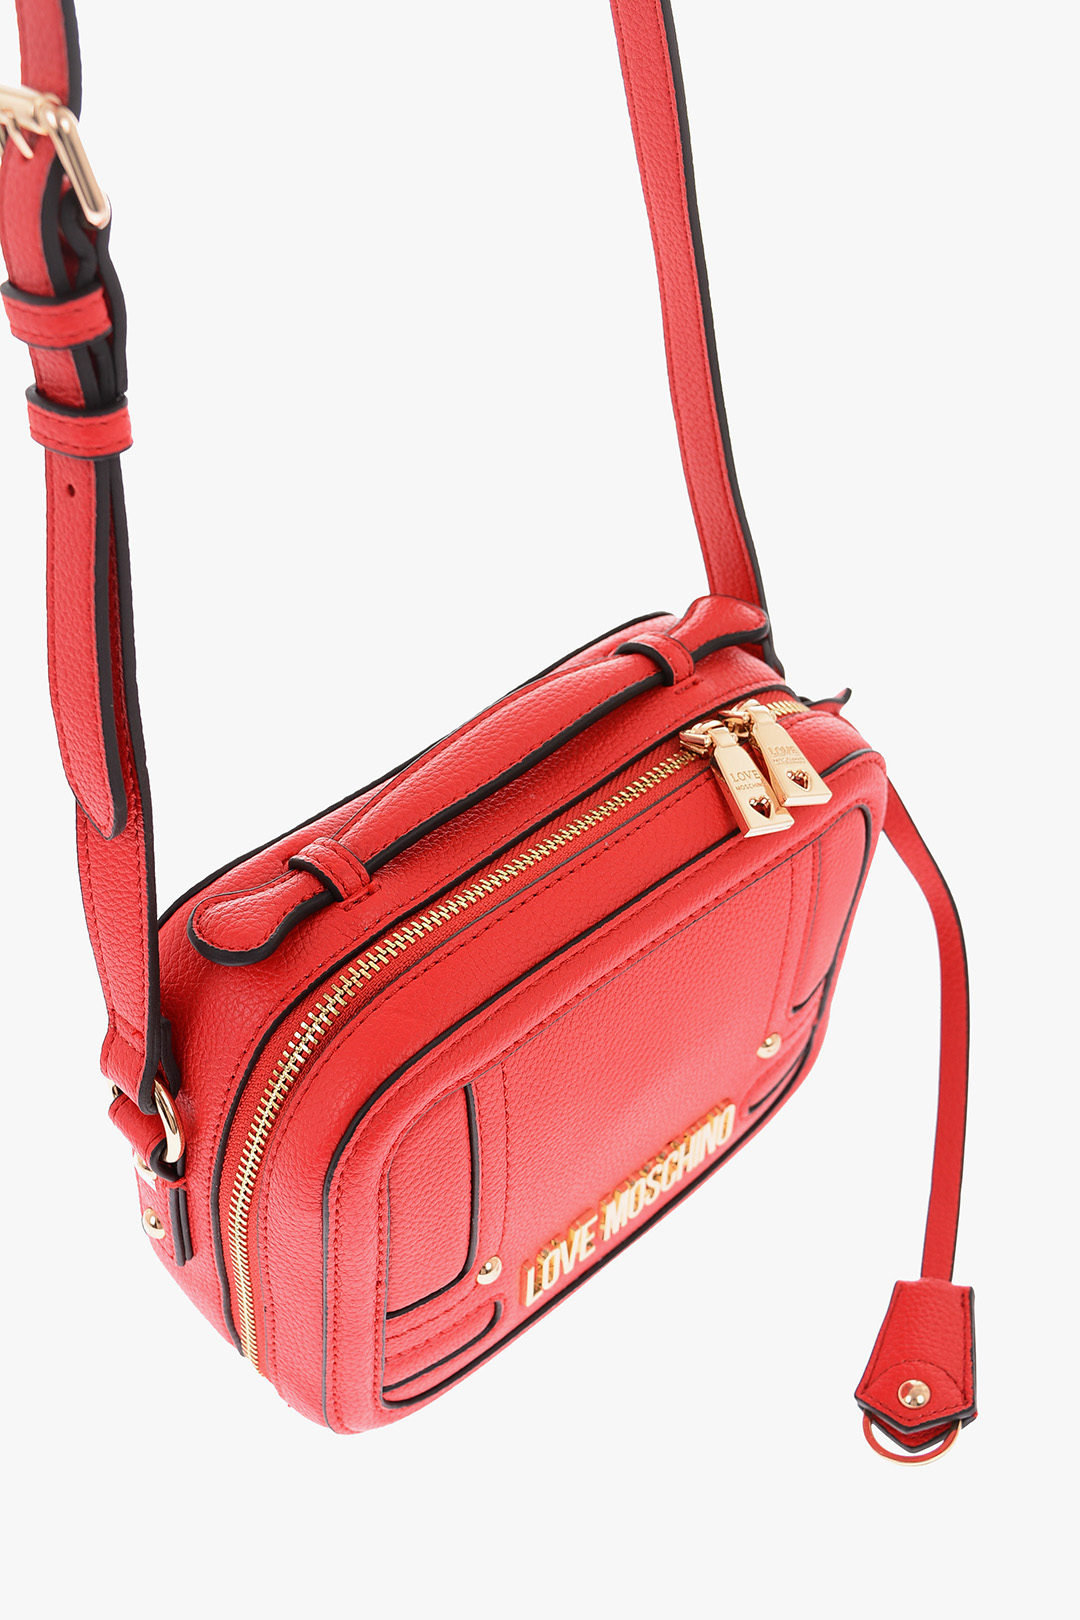 FOXLOVER Small Crossbody Bags for Women, PVC Faux Leather Ladies Monogram Shoulder Bag Satchel Handbag Purse